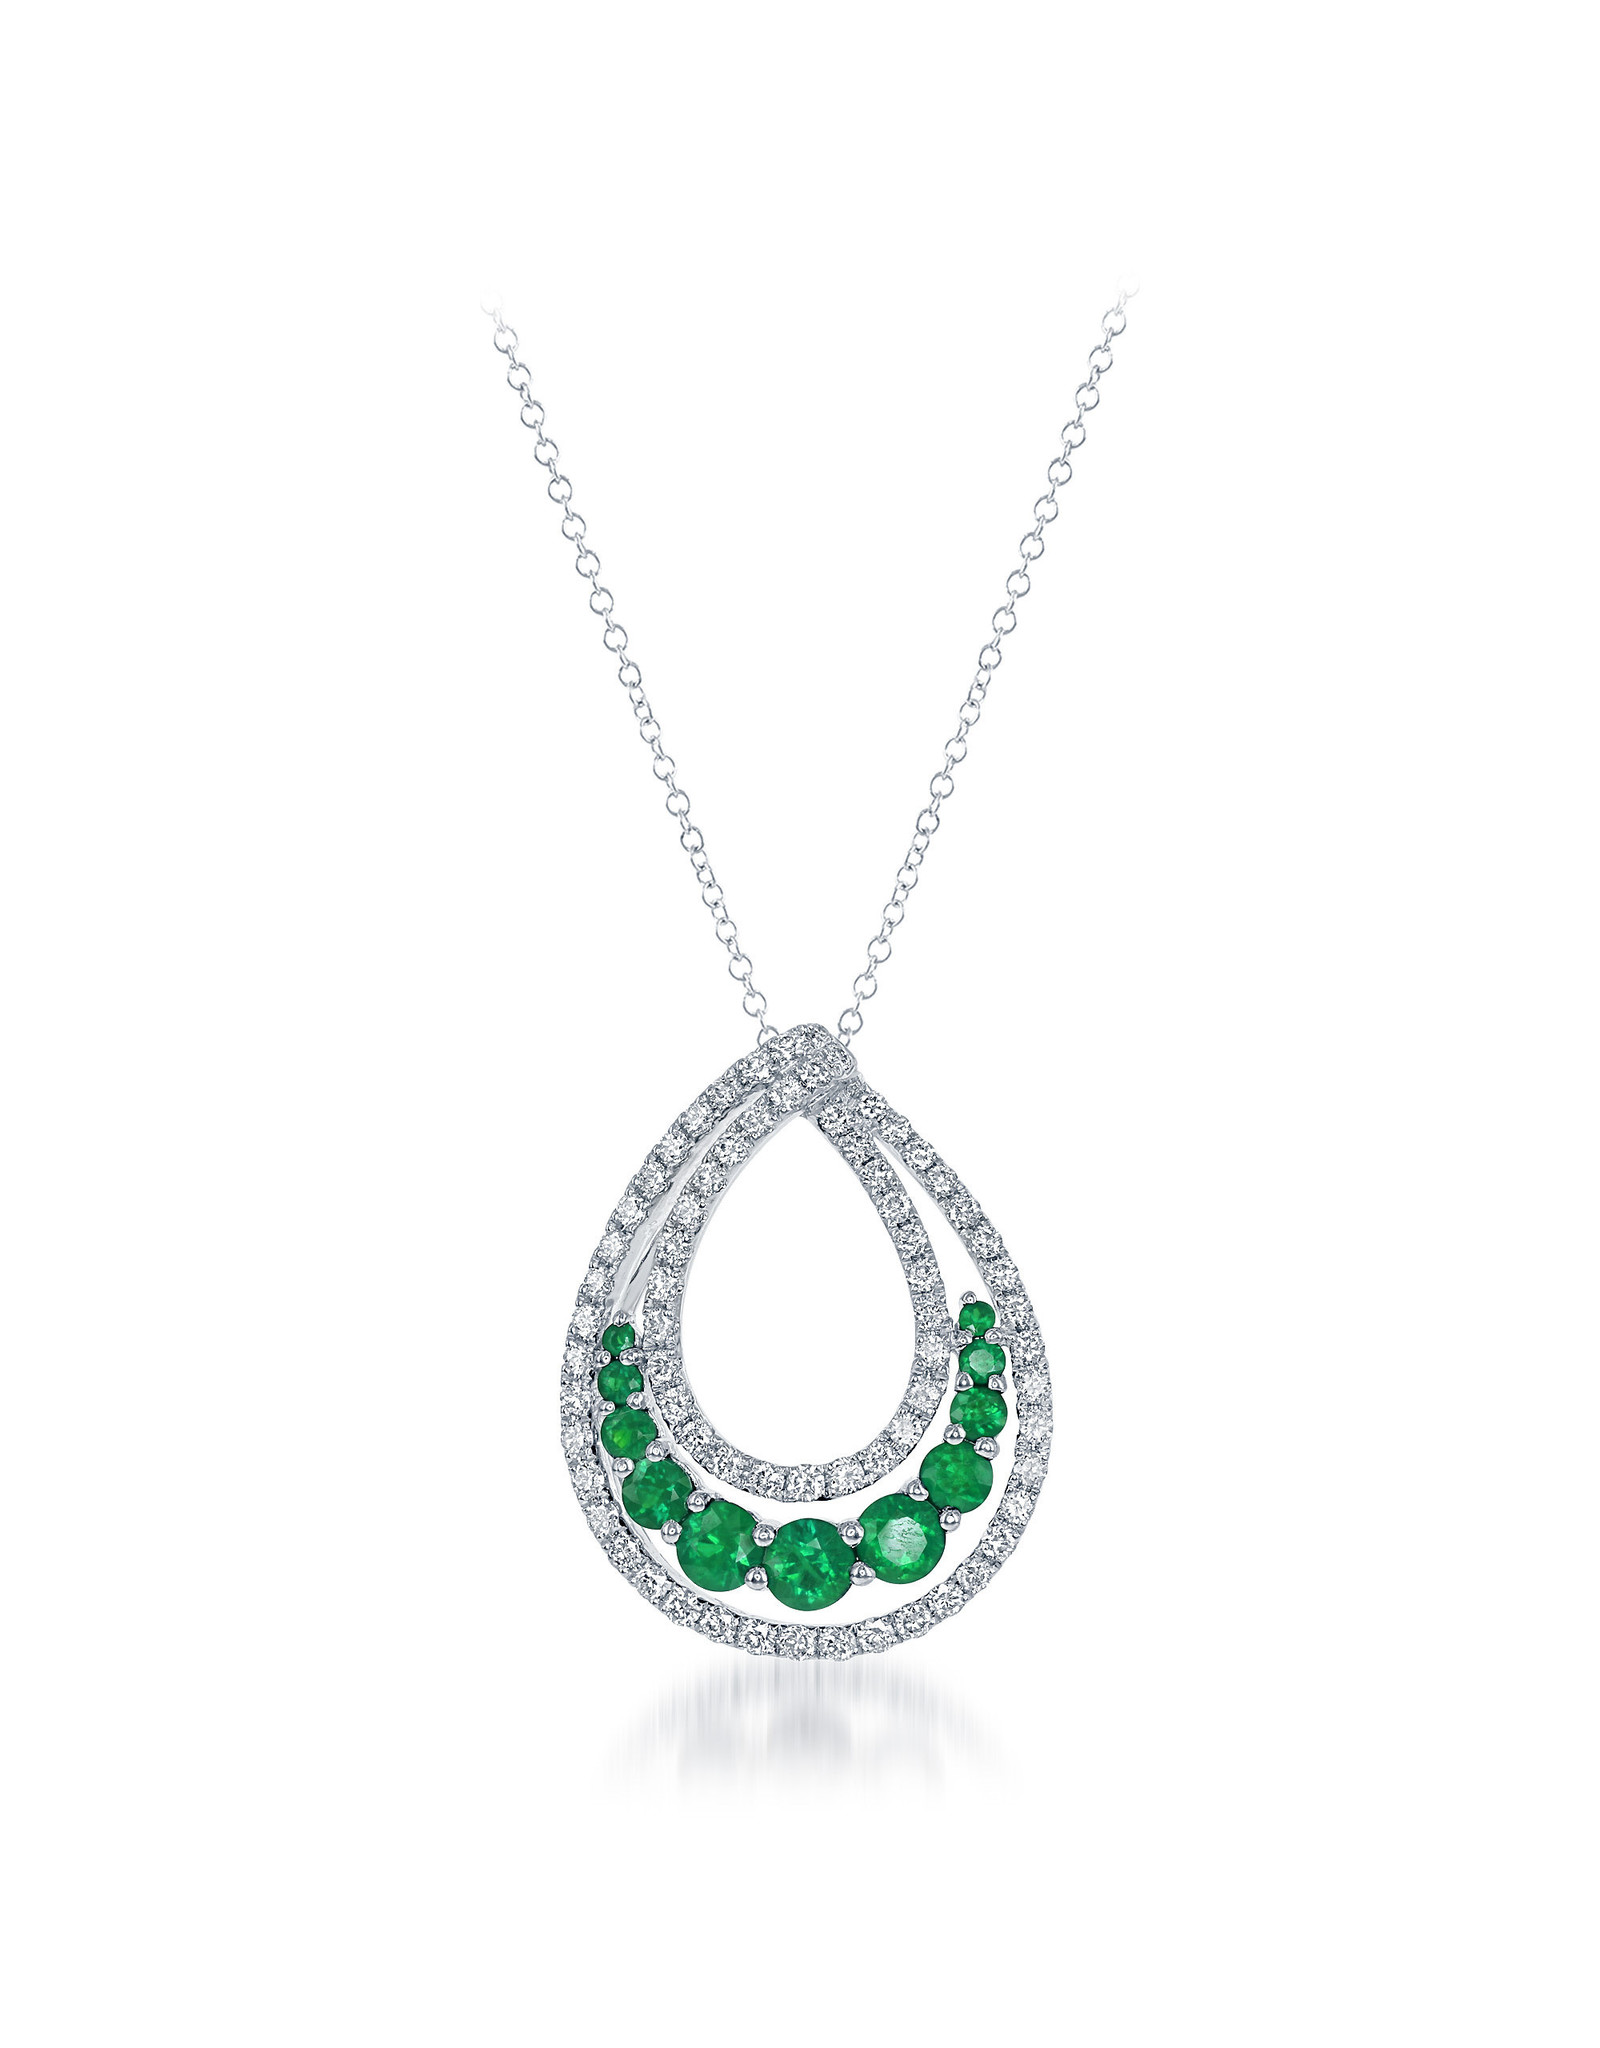 14K White Gold Emerald and Diamond Necklace, E:  0.69ct, D: 0.63ct